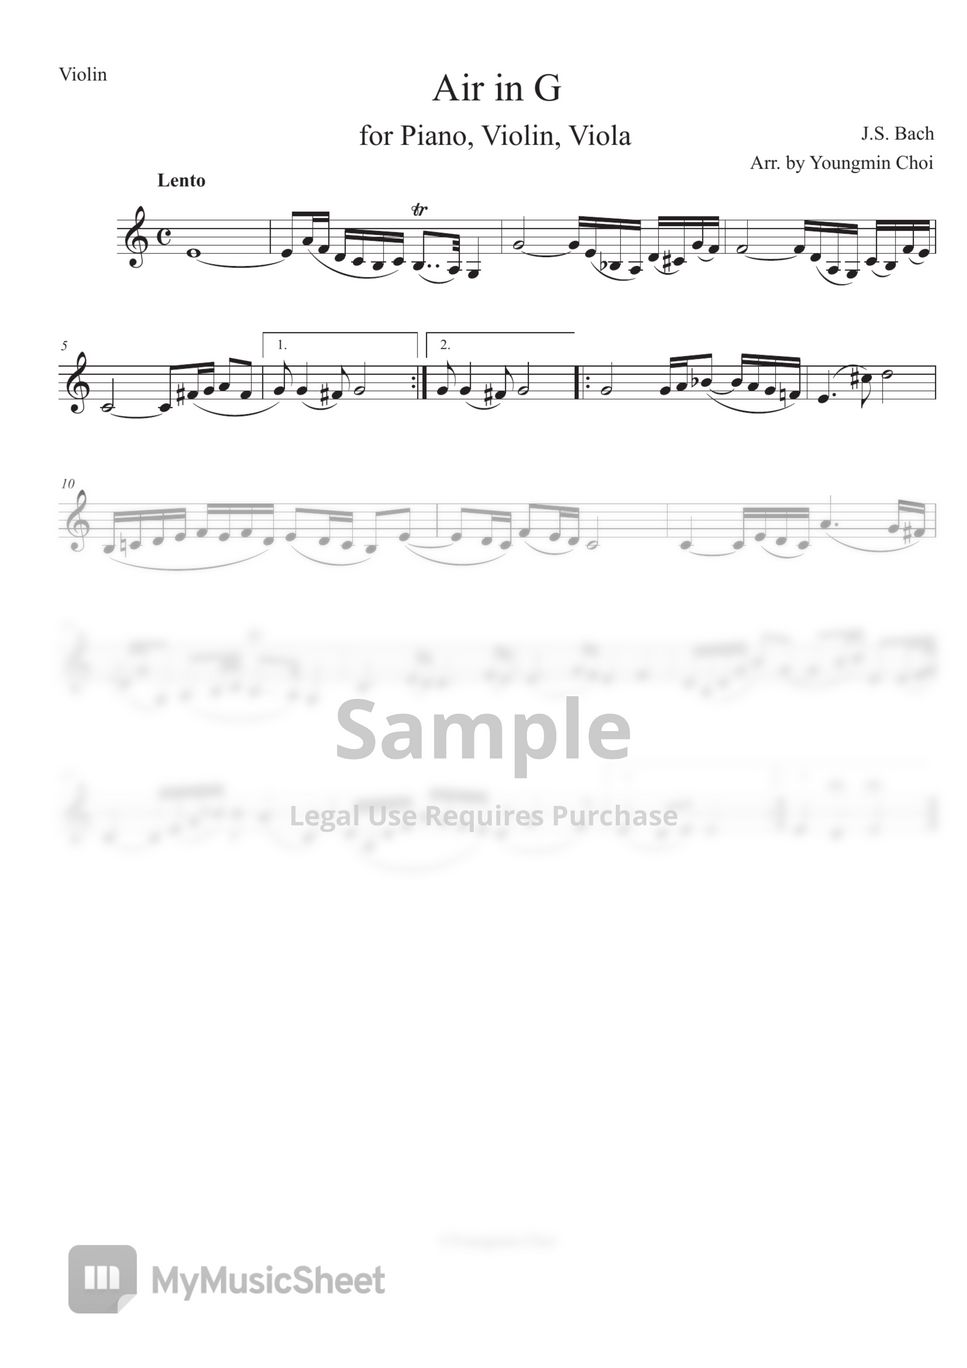 J.S.Bach - G 선상의 아리아 (Air in G) for Violin, Viola, Piano (피아노/비올라/바이올린) by Youngmin Choi